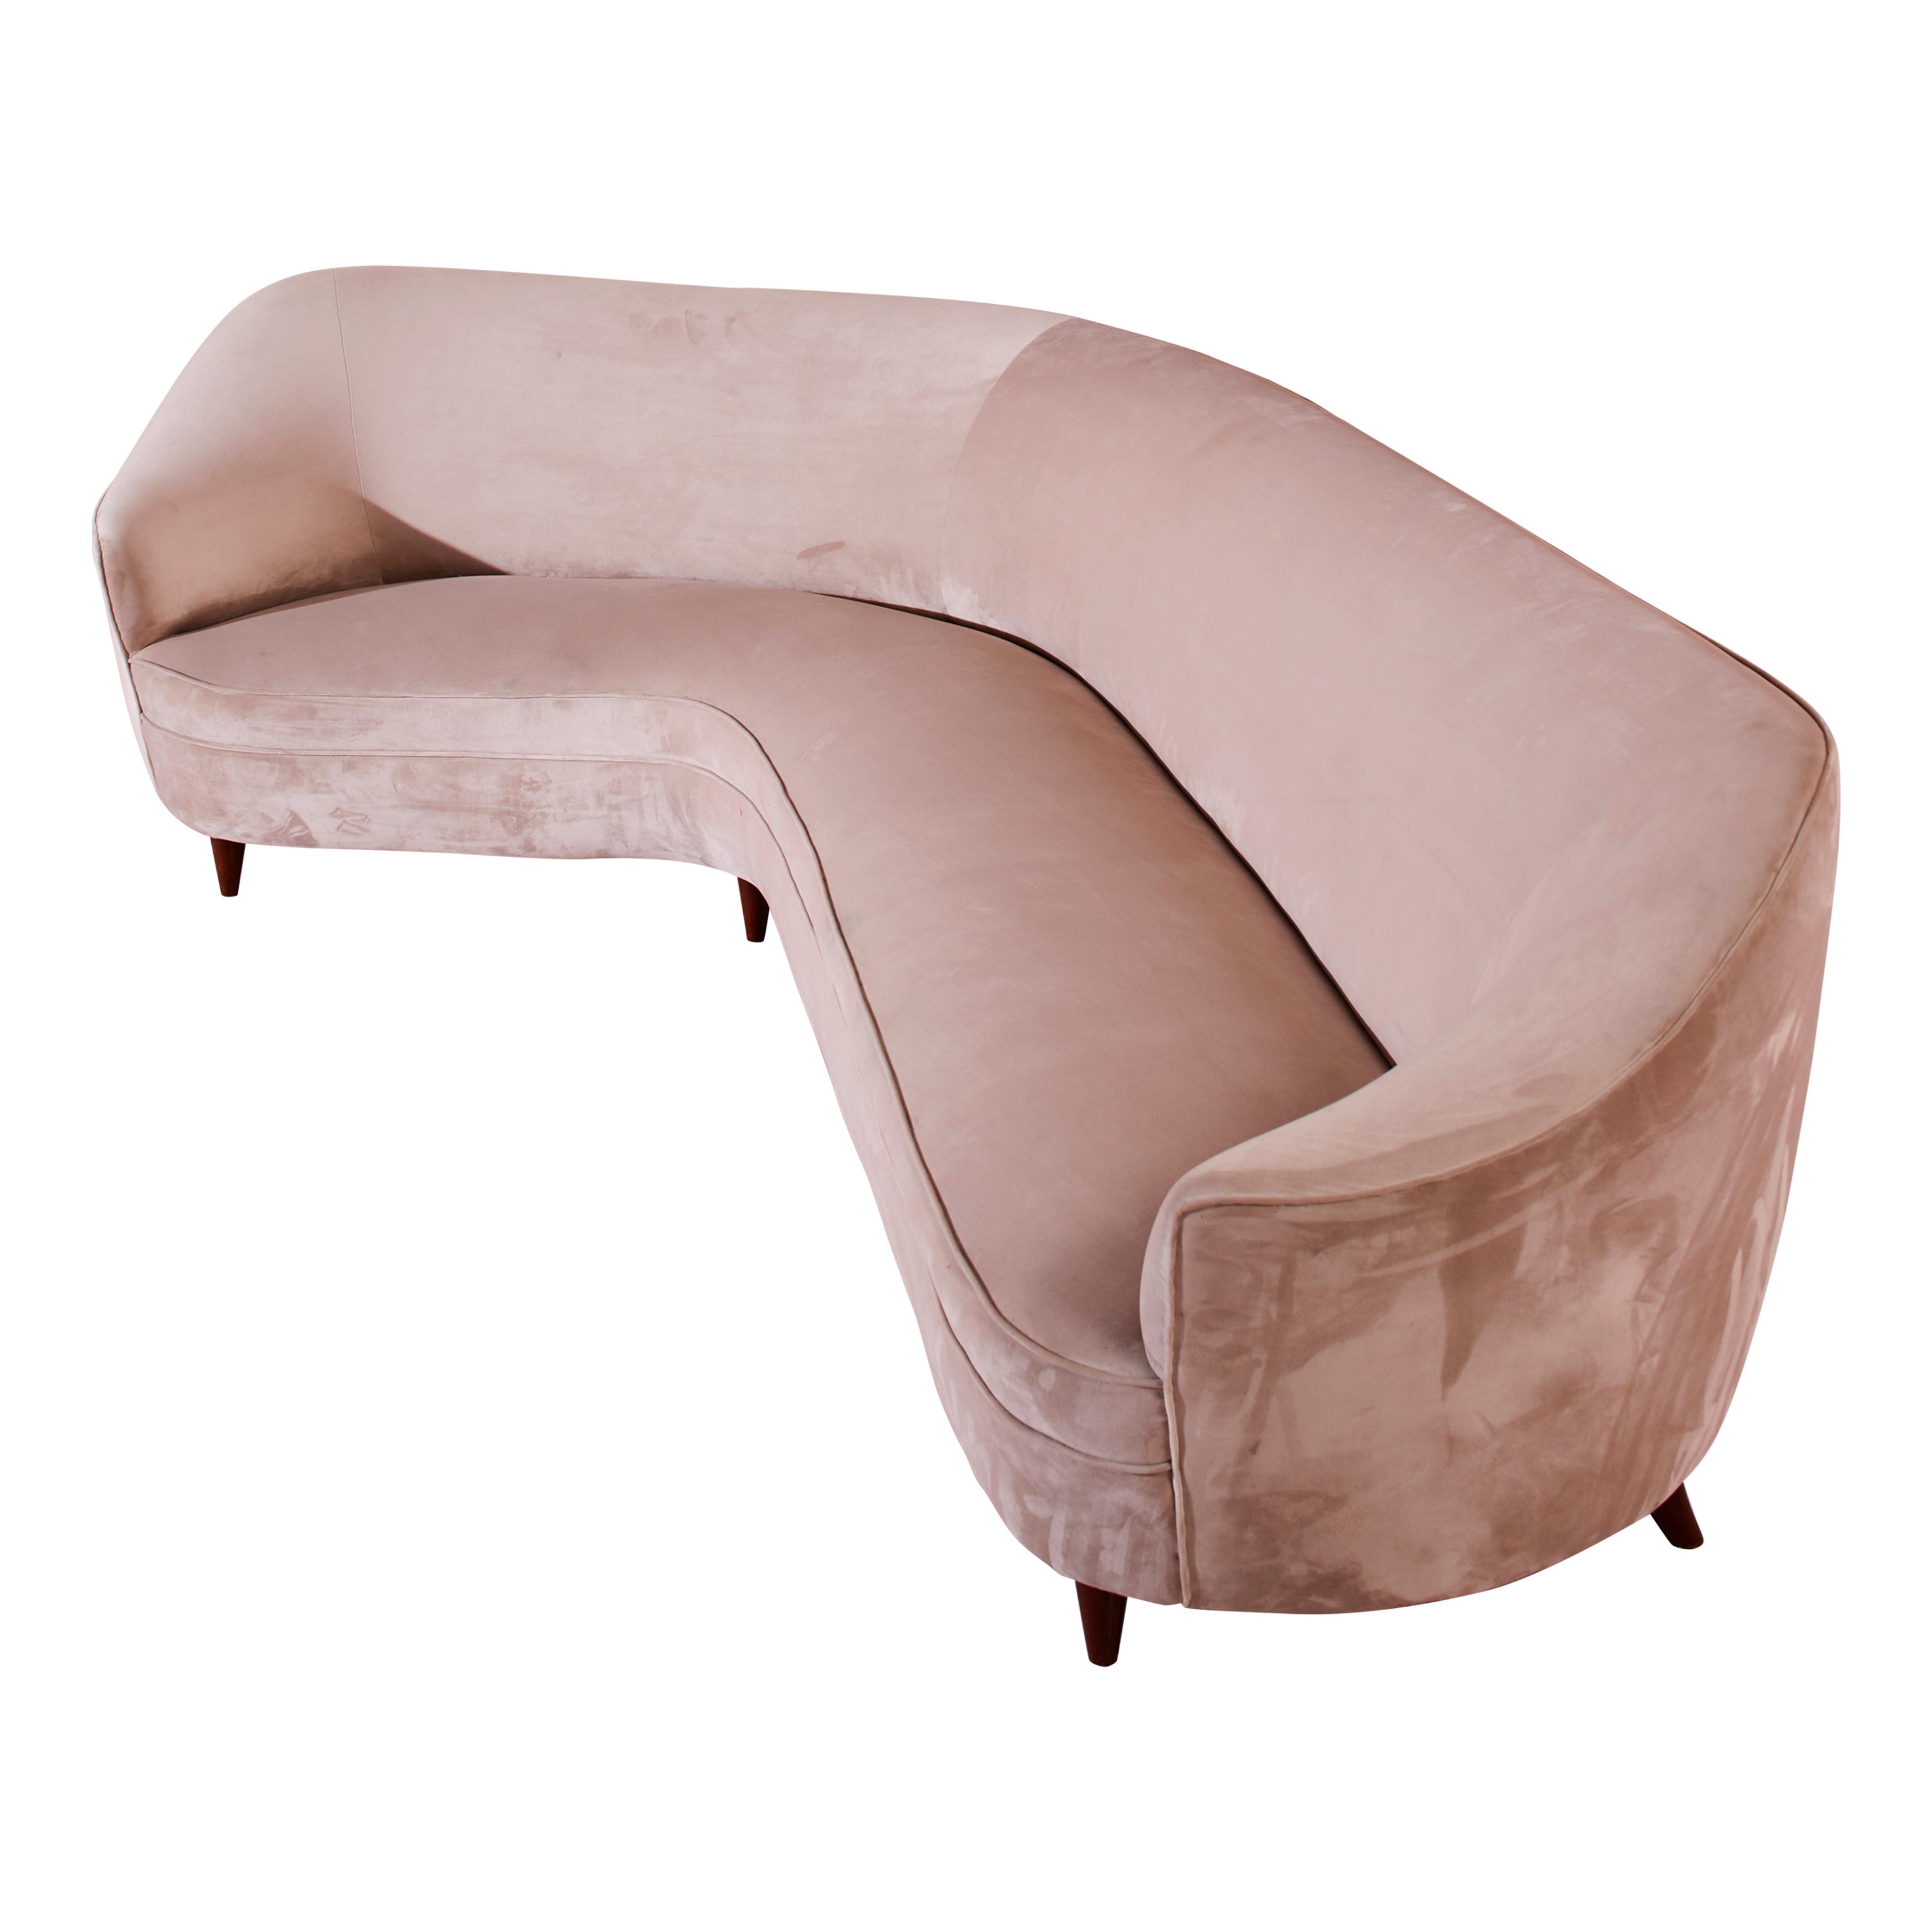 Gio Ponti curved sofa by Casa e Giardino, Italy, 1940s